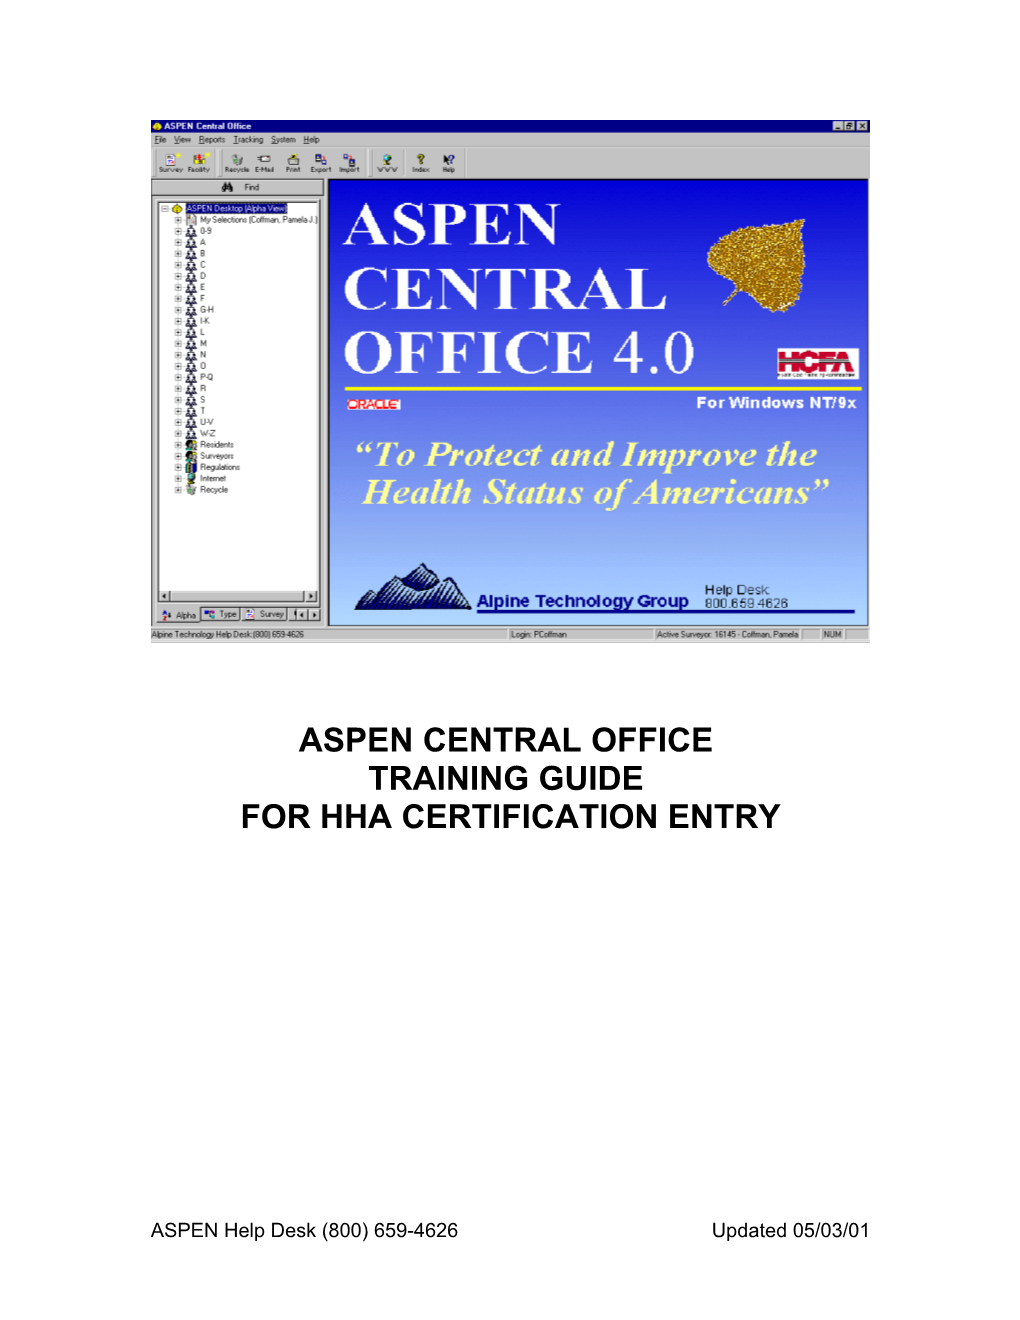 Aspen Central Office